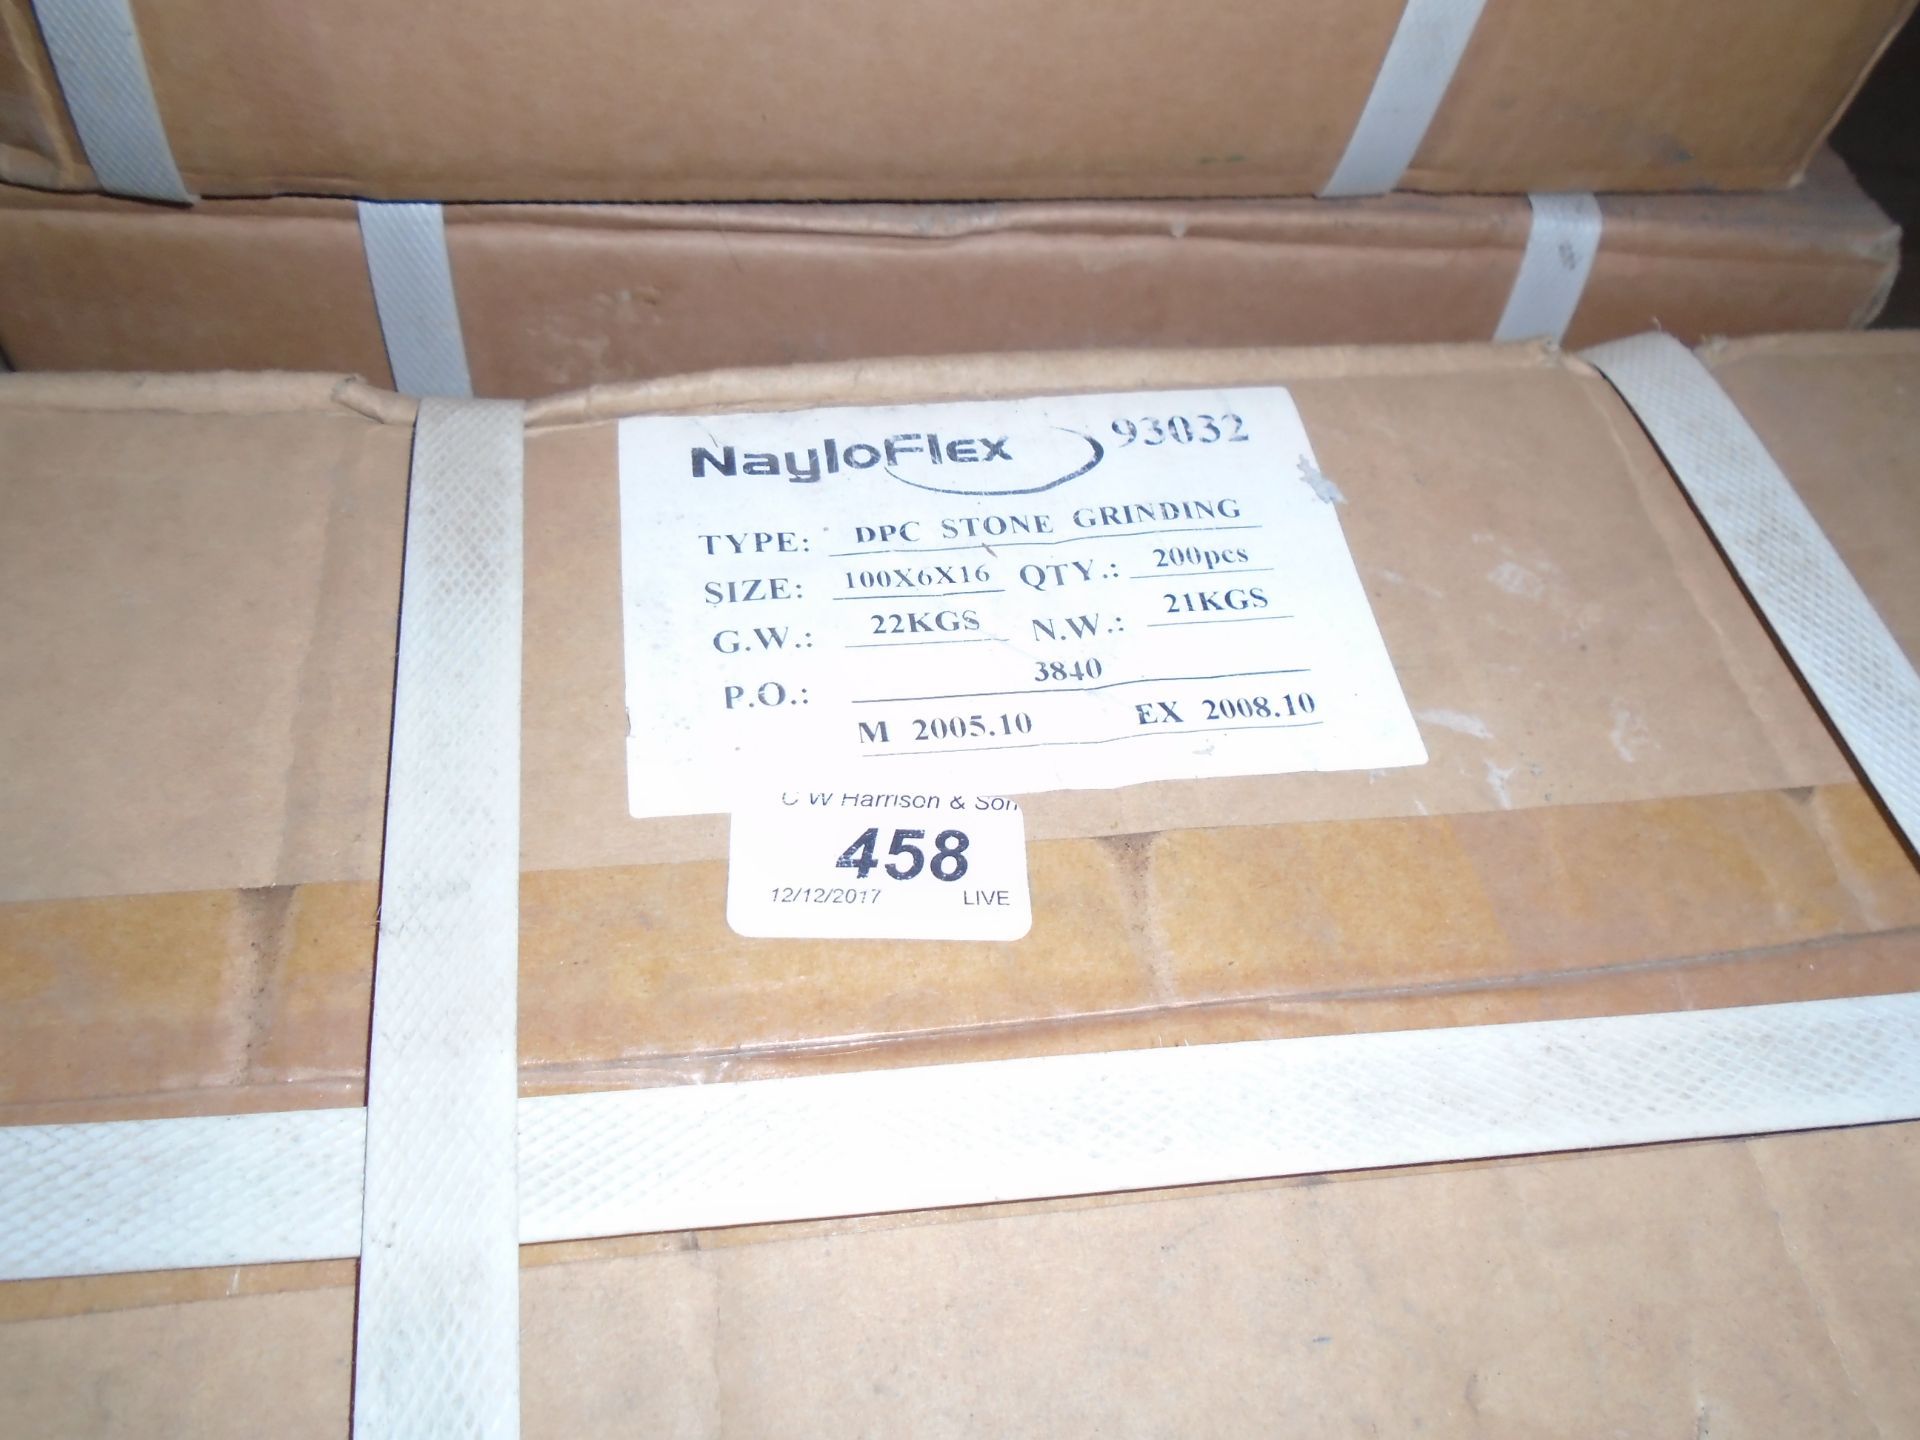 200 x Nayloflex DPC 100 x 6 x 16mm stone cutting discs (1 box - unopened)